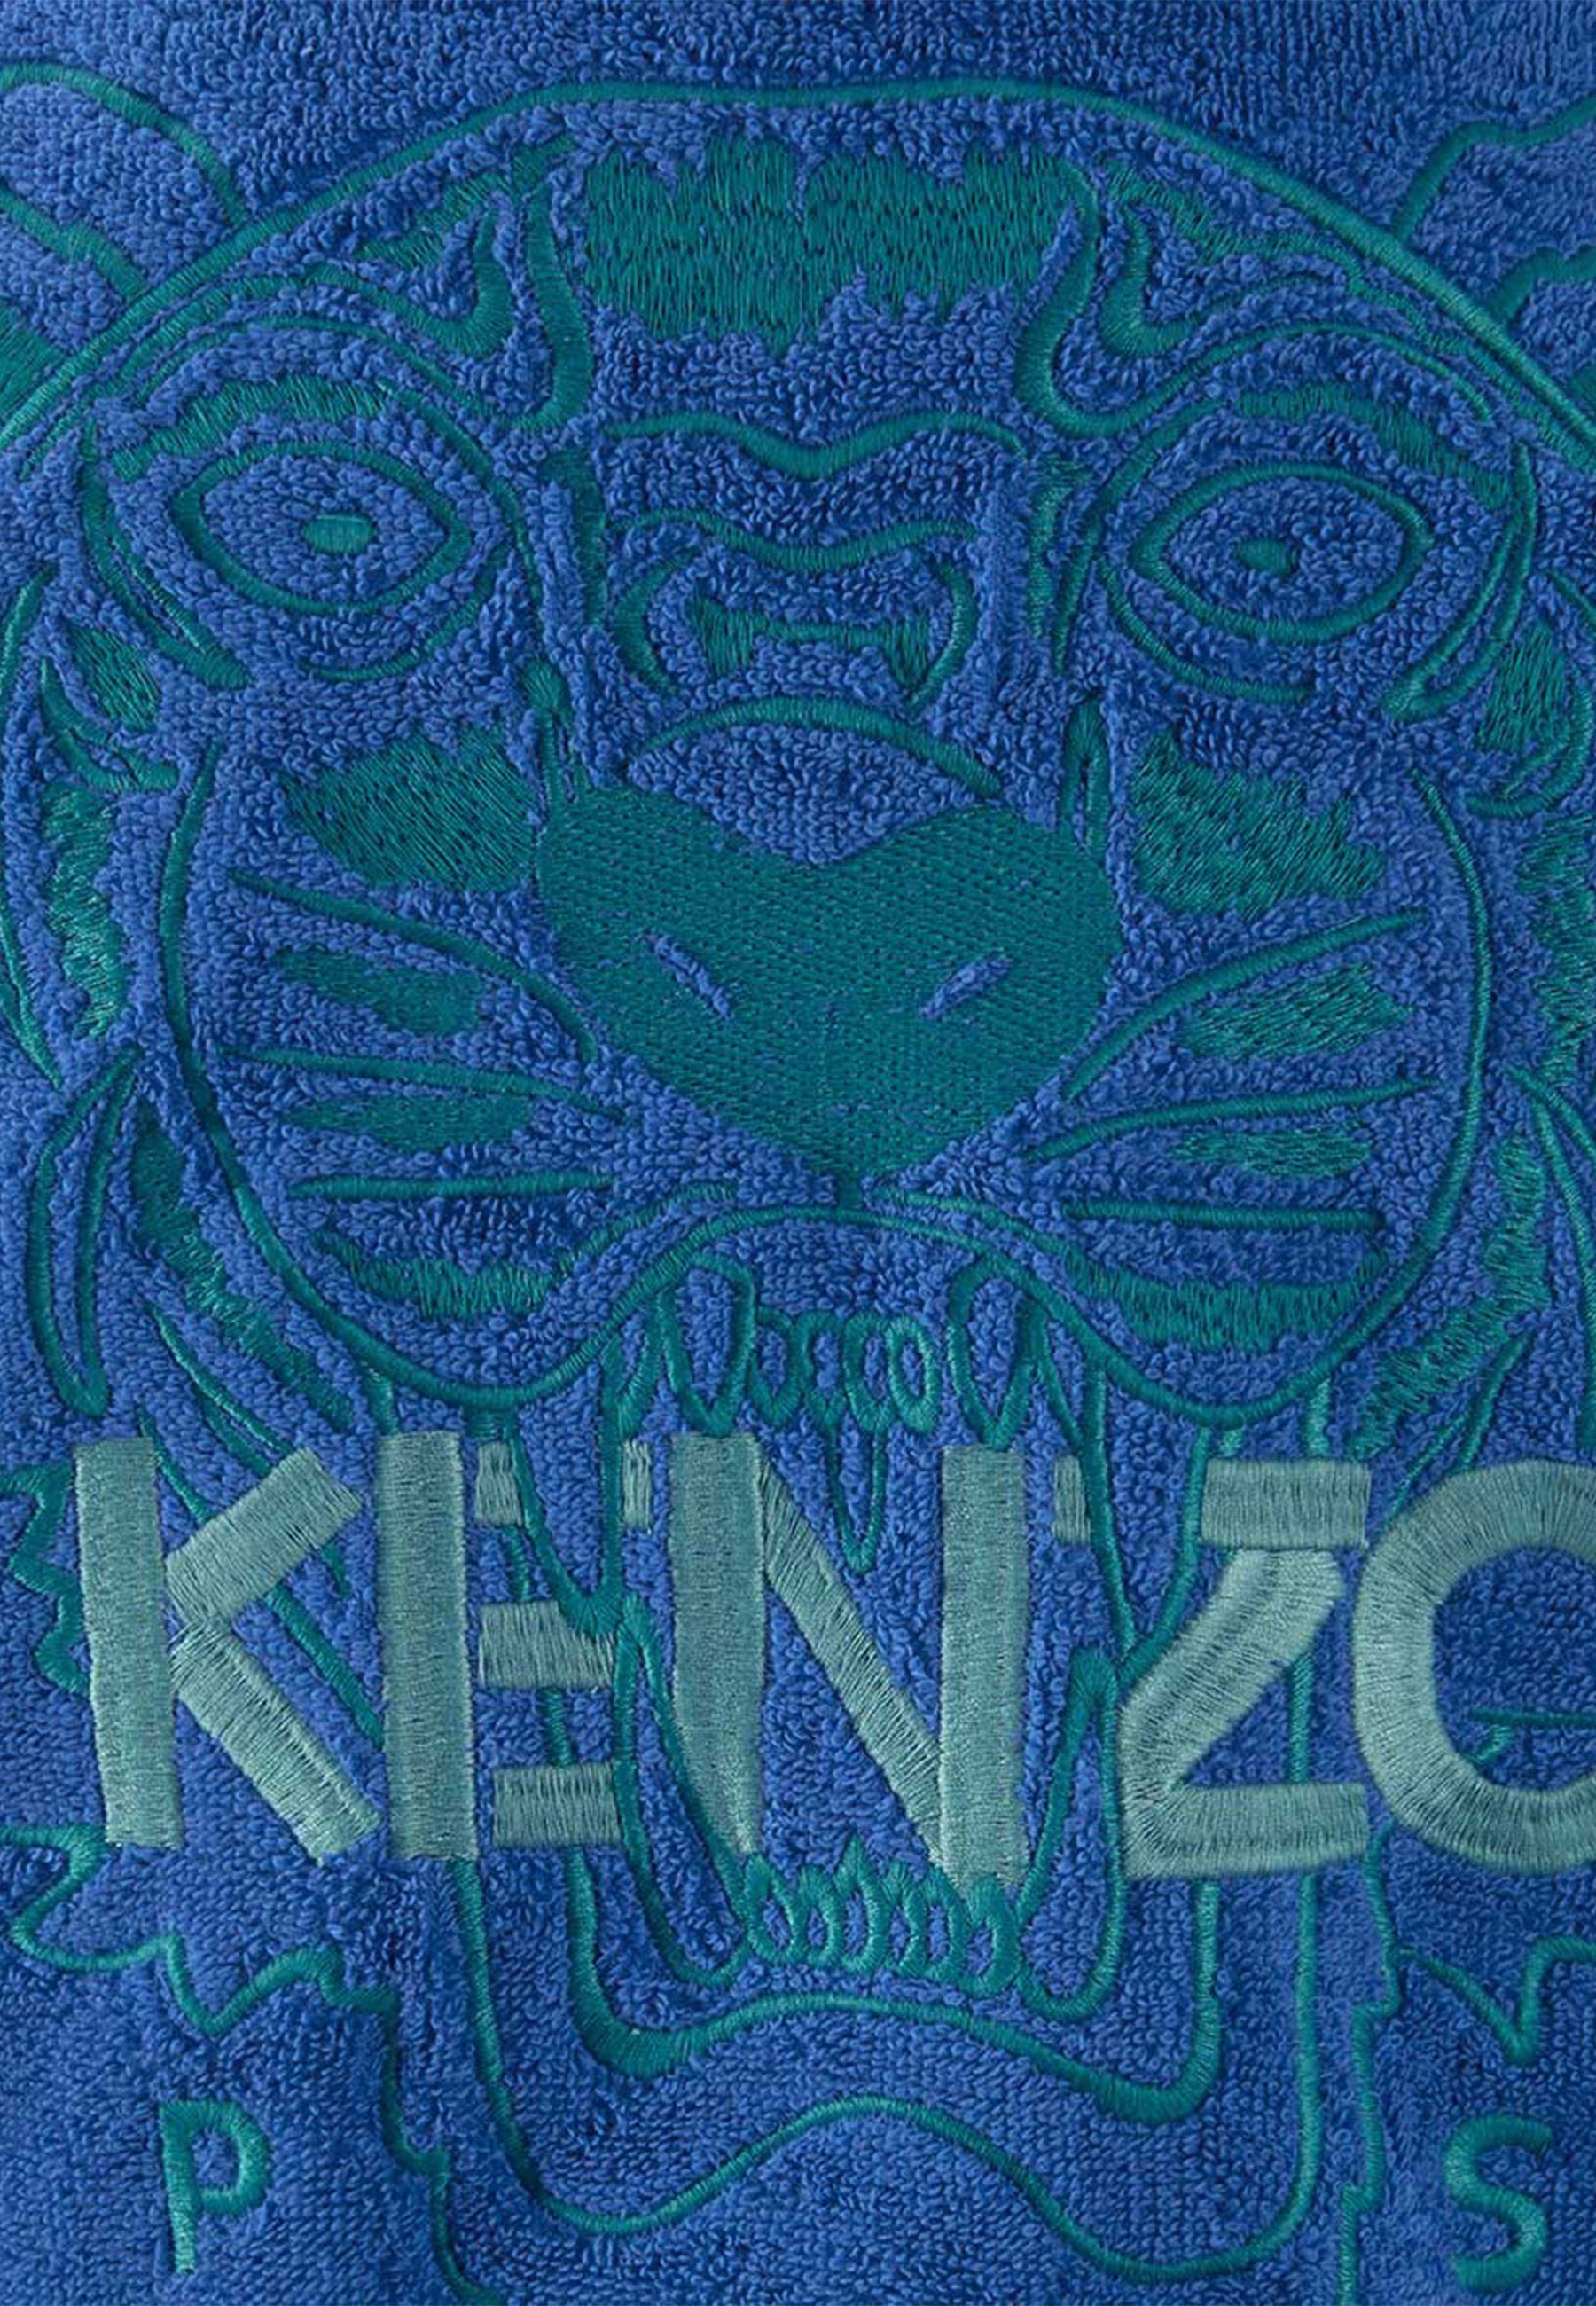 KENZO MAISON Bademantel 100.0% mit Baumwolle, Design K ICONIC, modernem